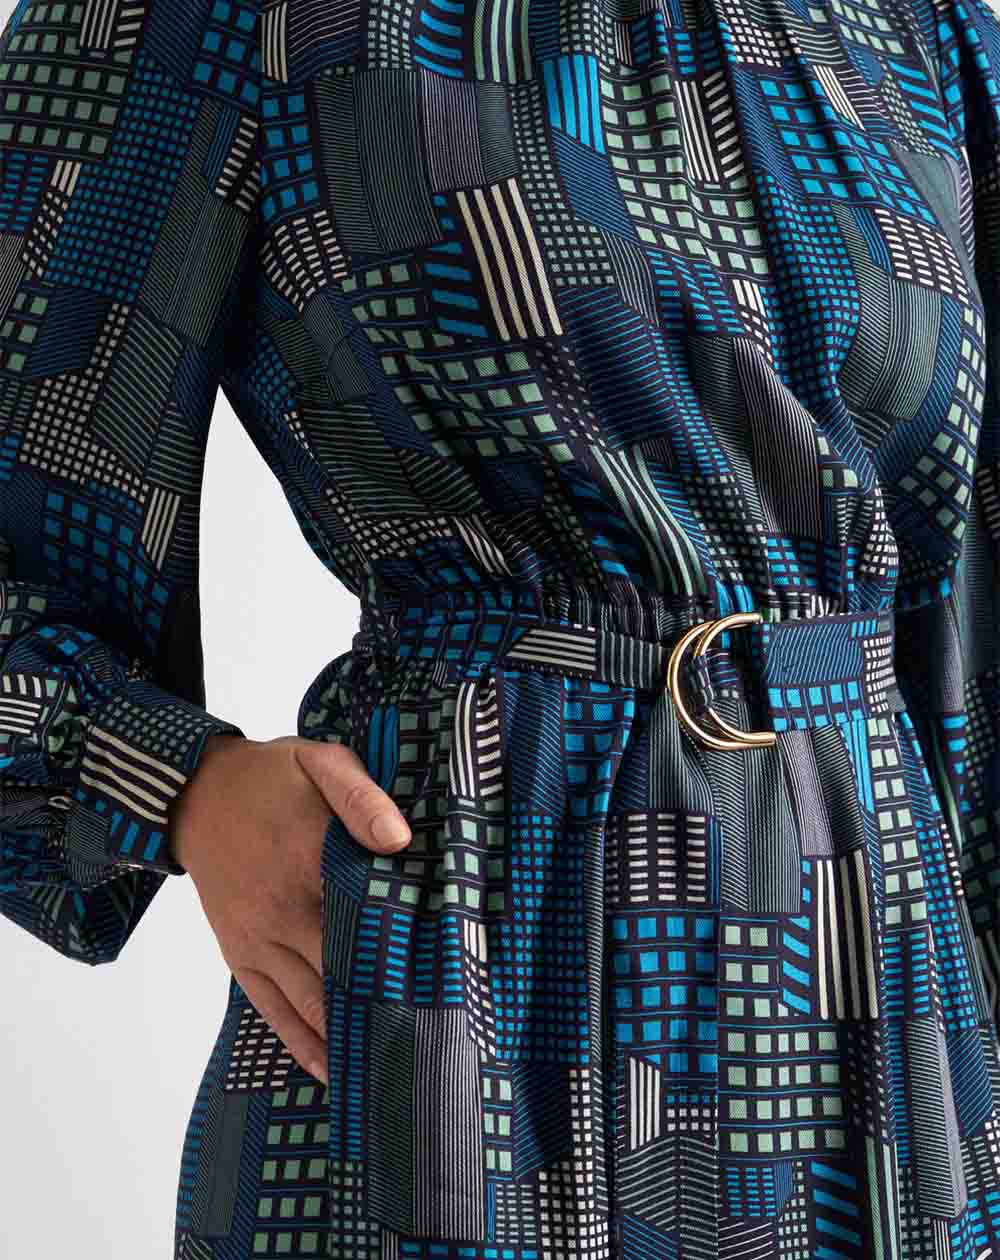 Louche - Collyn Long Sleeve Mini Dress -  Geo City Print